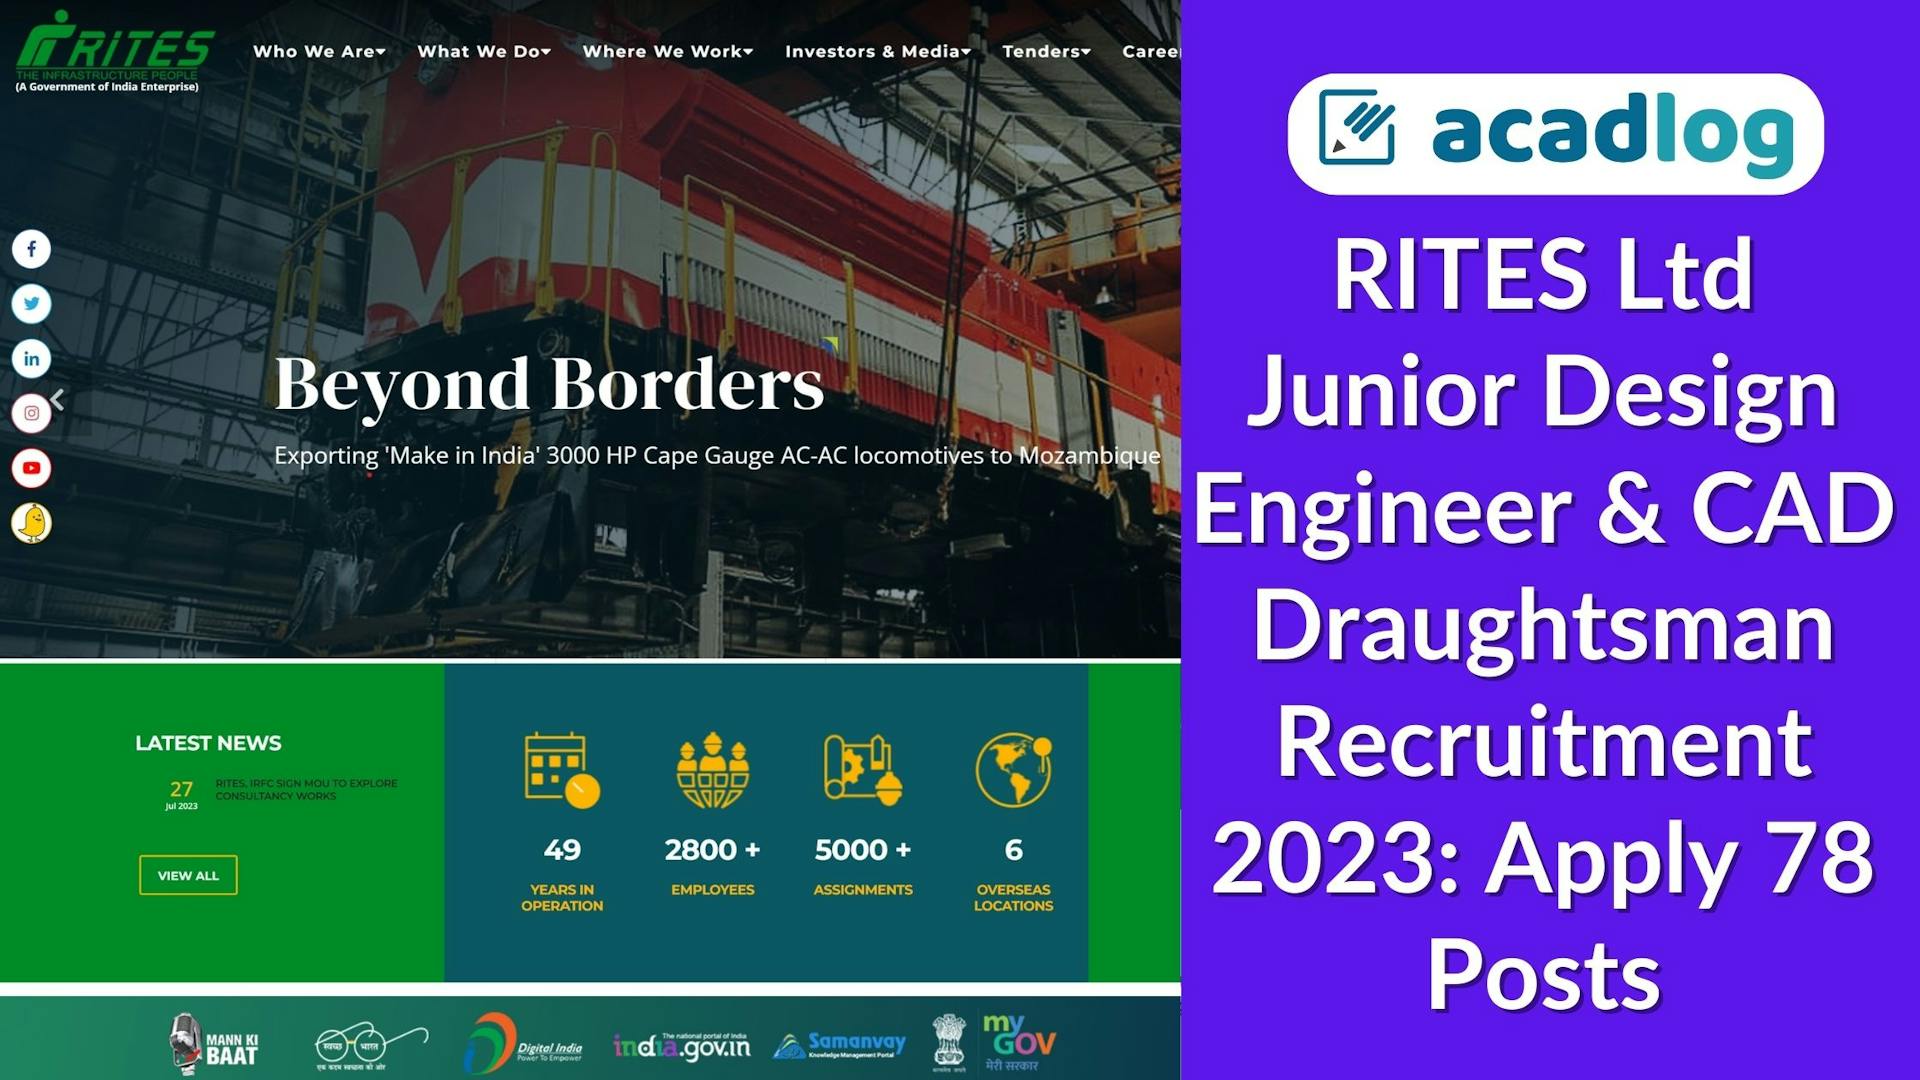 RITES Ltd Junior Design Engineer & CAD Draughtsman Recruitment 2023: Apply 78 Posts